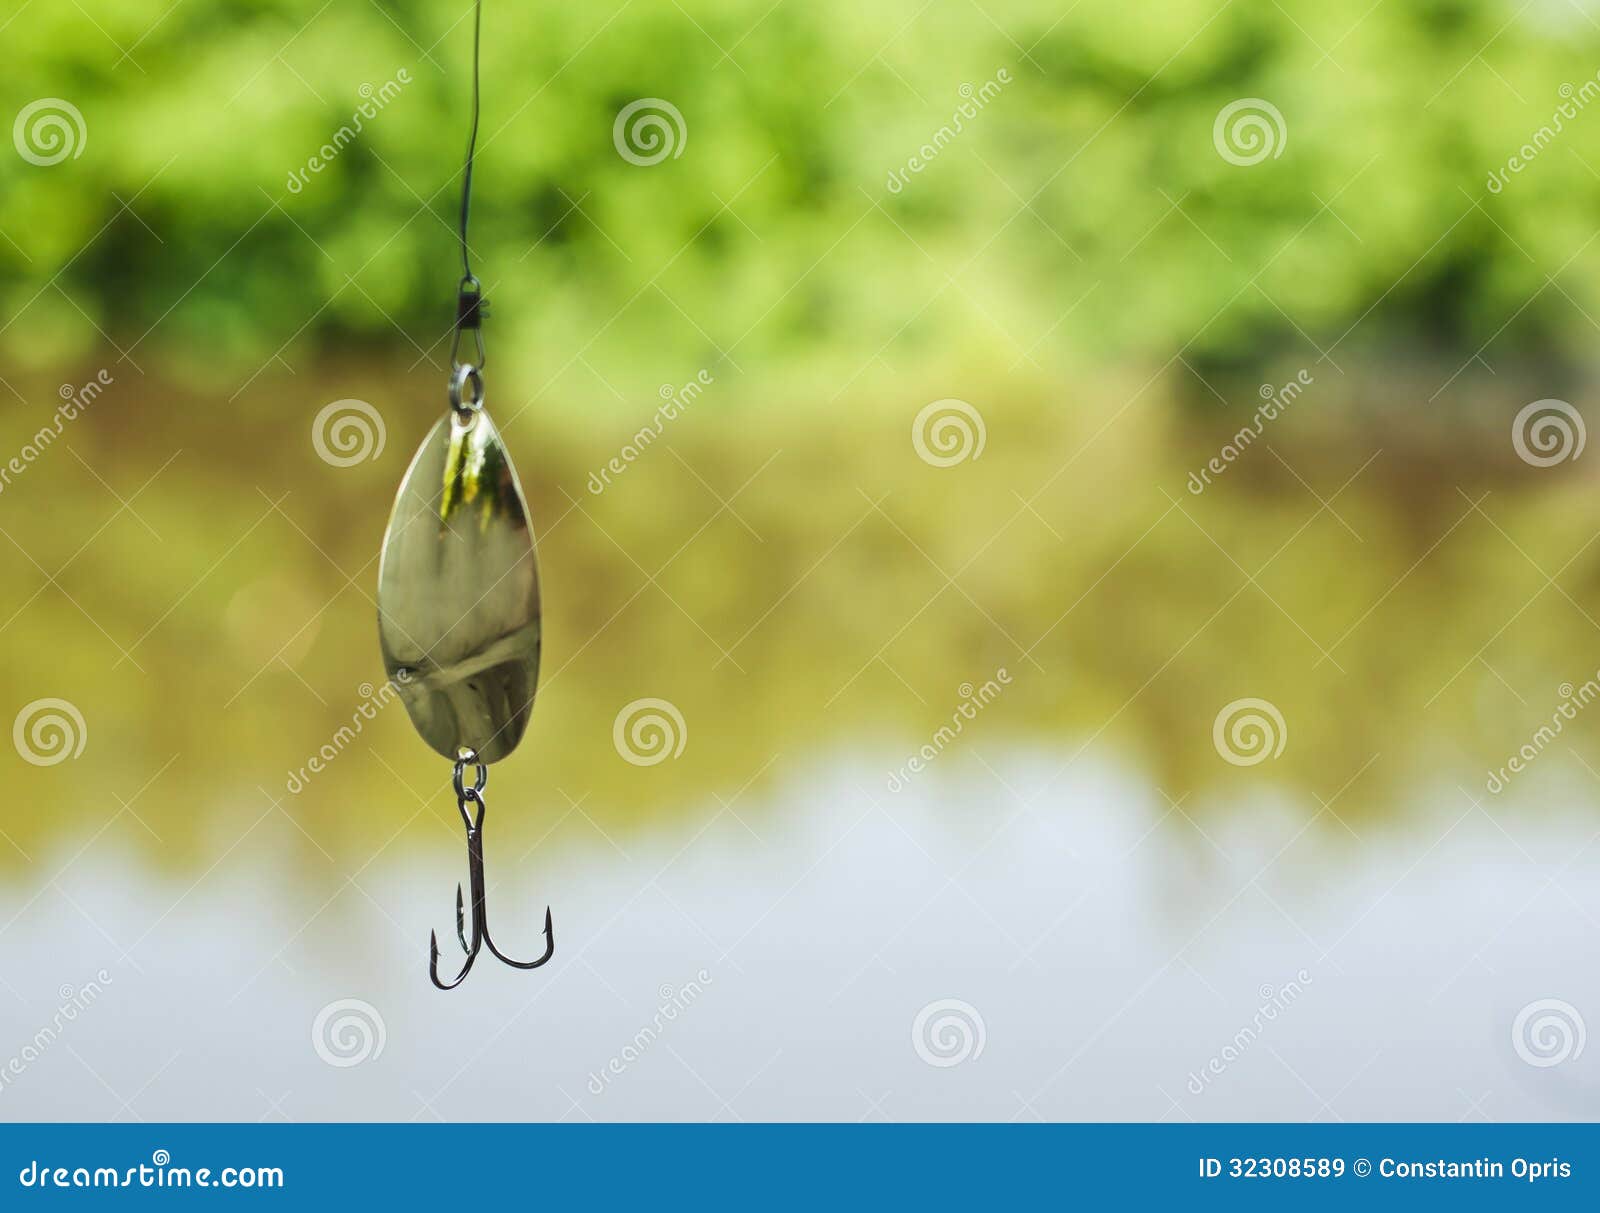 Fishing lure stock image. Image of medium, anchor, gold - 32308589